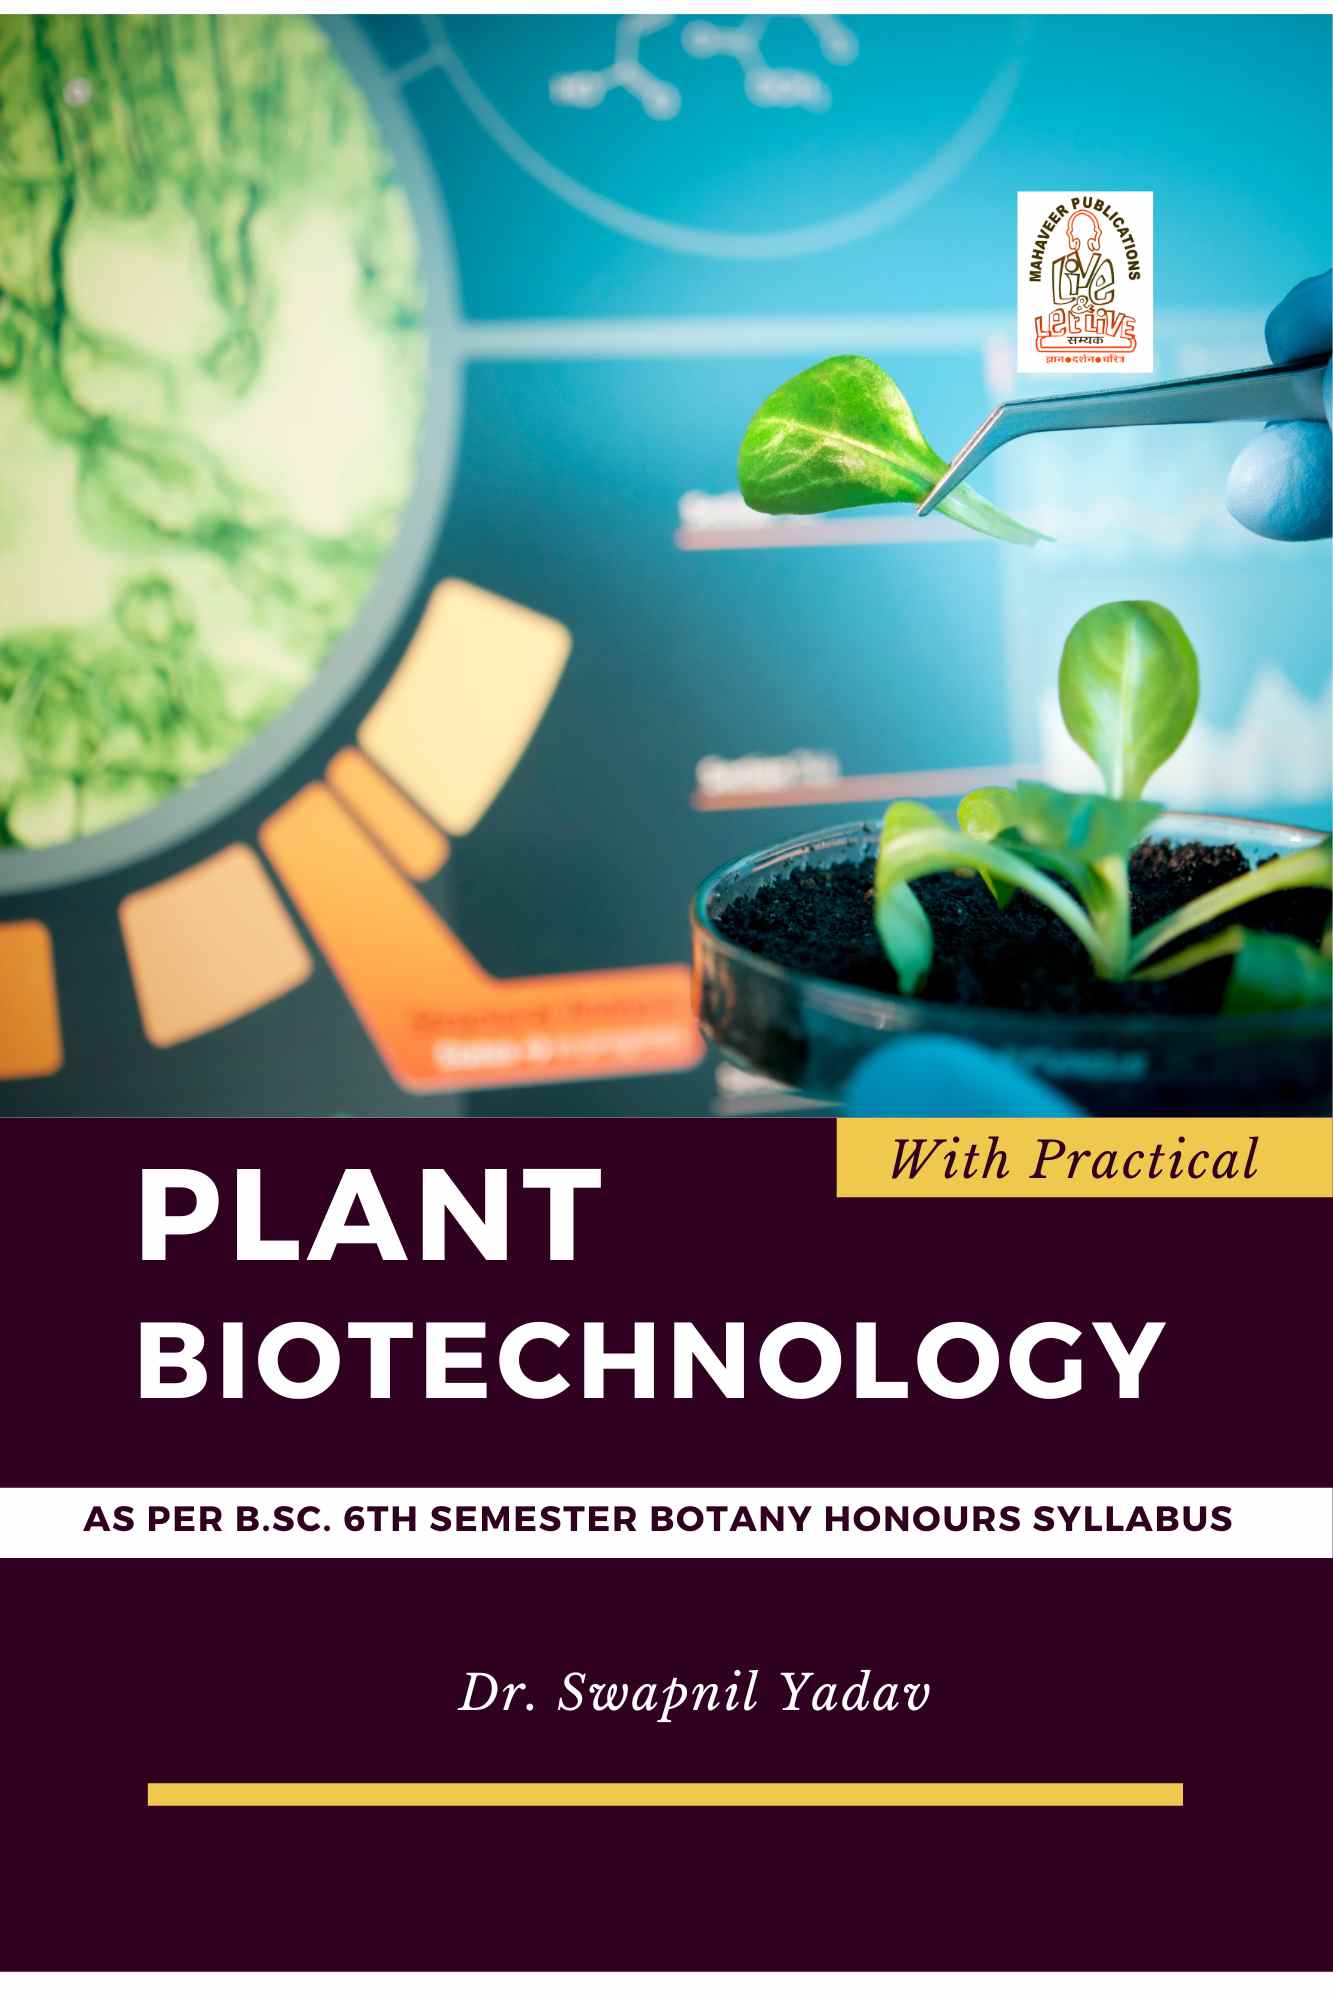 PLANT-BIOTECHNOLOGY.jpg